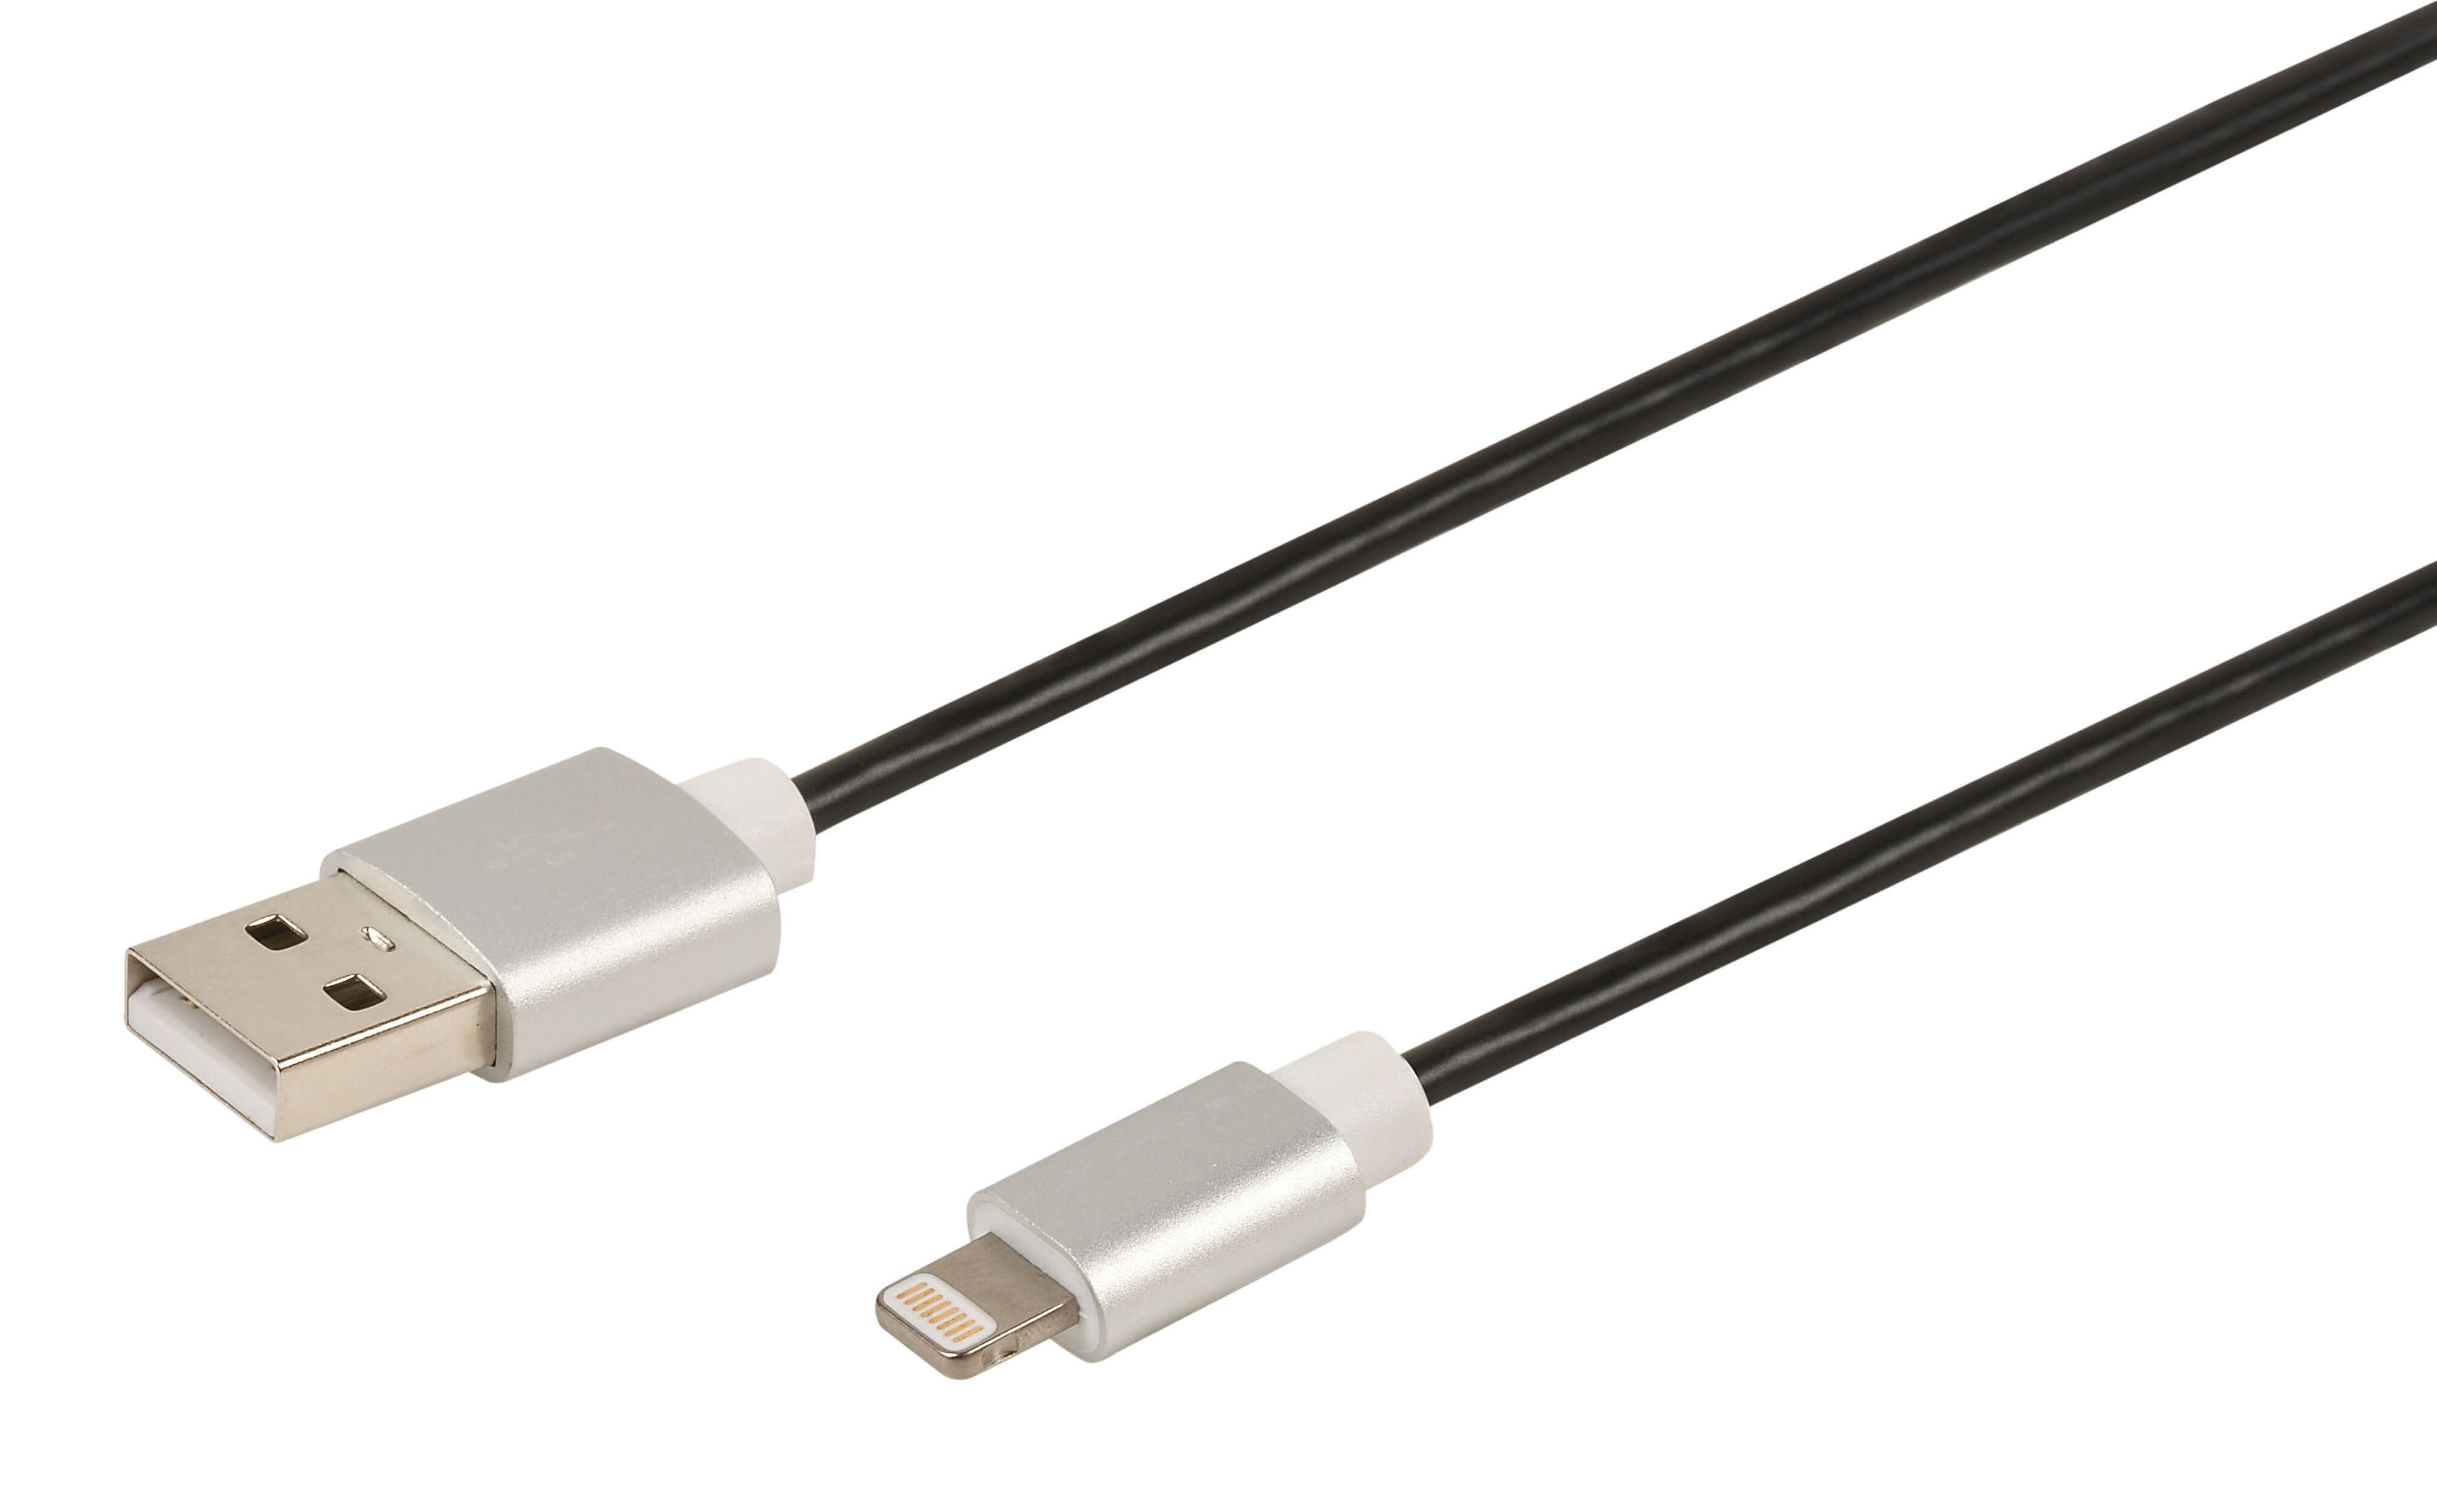 Erard - Cordon USB 2.0 A M/Lightning M - 2.4A - licence Apple MFI - prises alu -noir- 1m